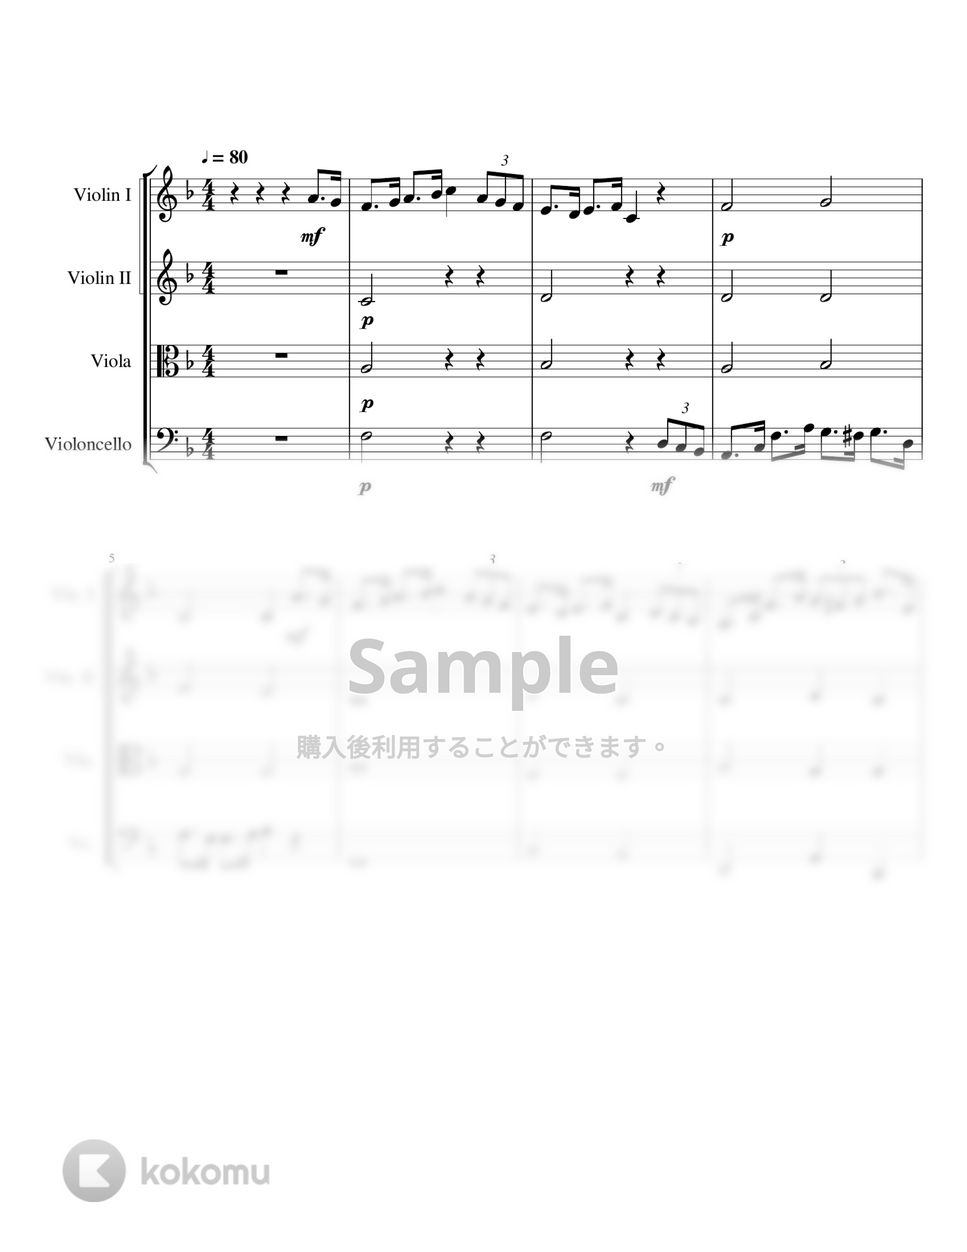 大塚　錥子 - 民衆の歌(Do You Hear The People Sing)【弦楽四重奏】 by Cellotto